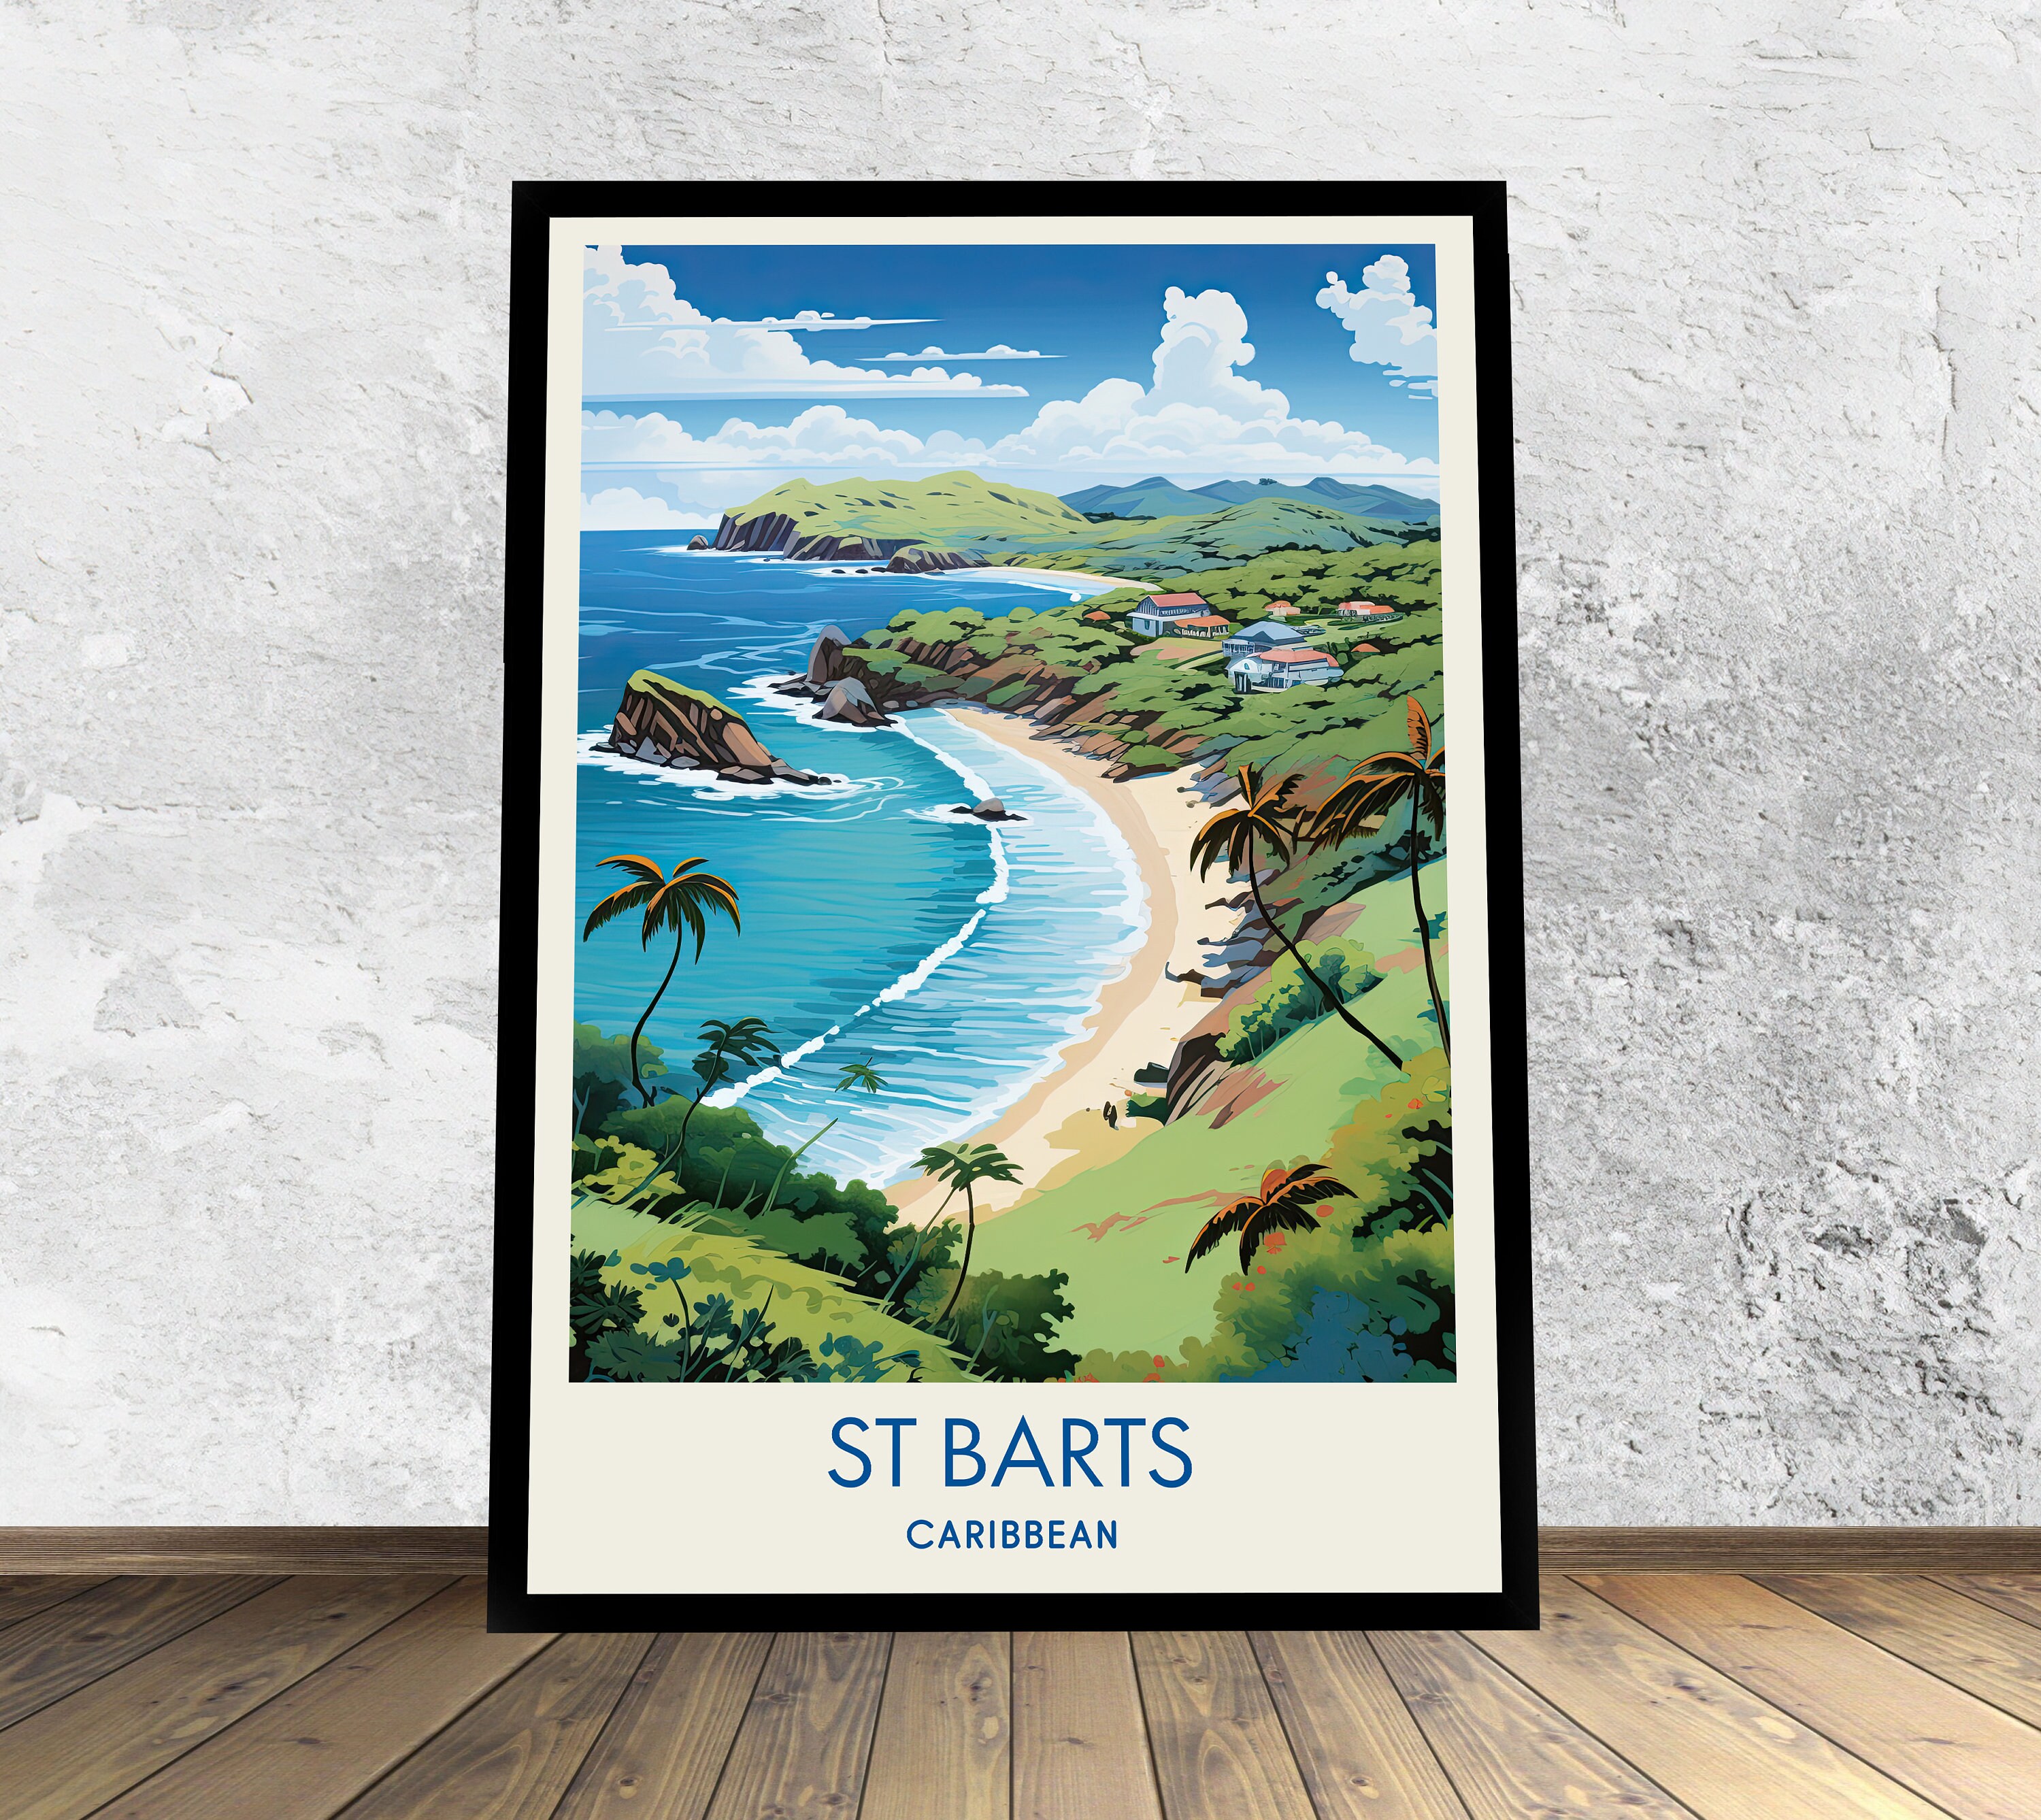 St Barts downtown - Maps & Merlot